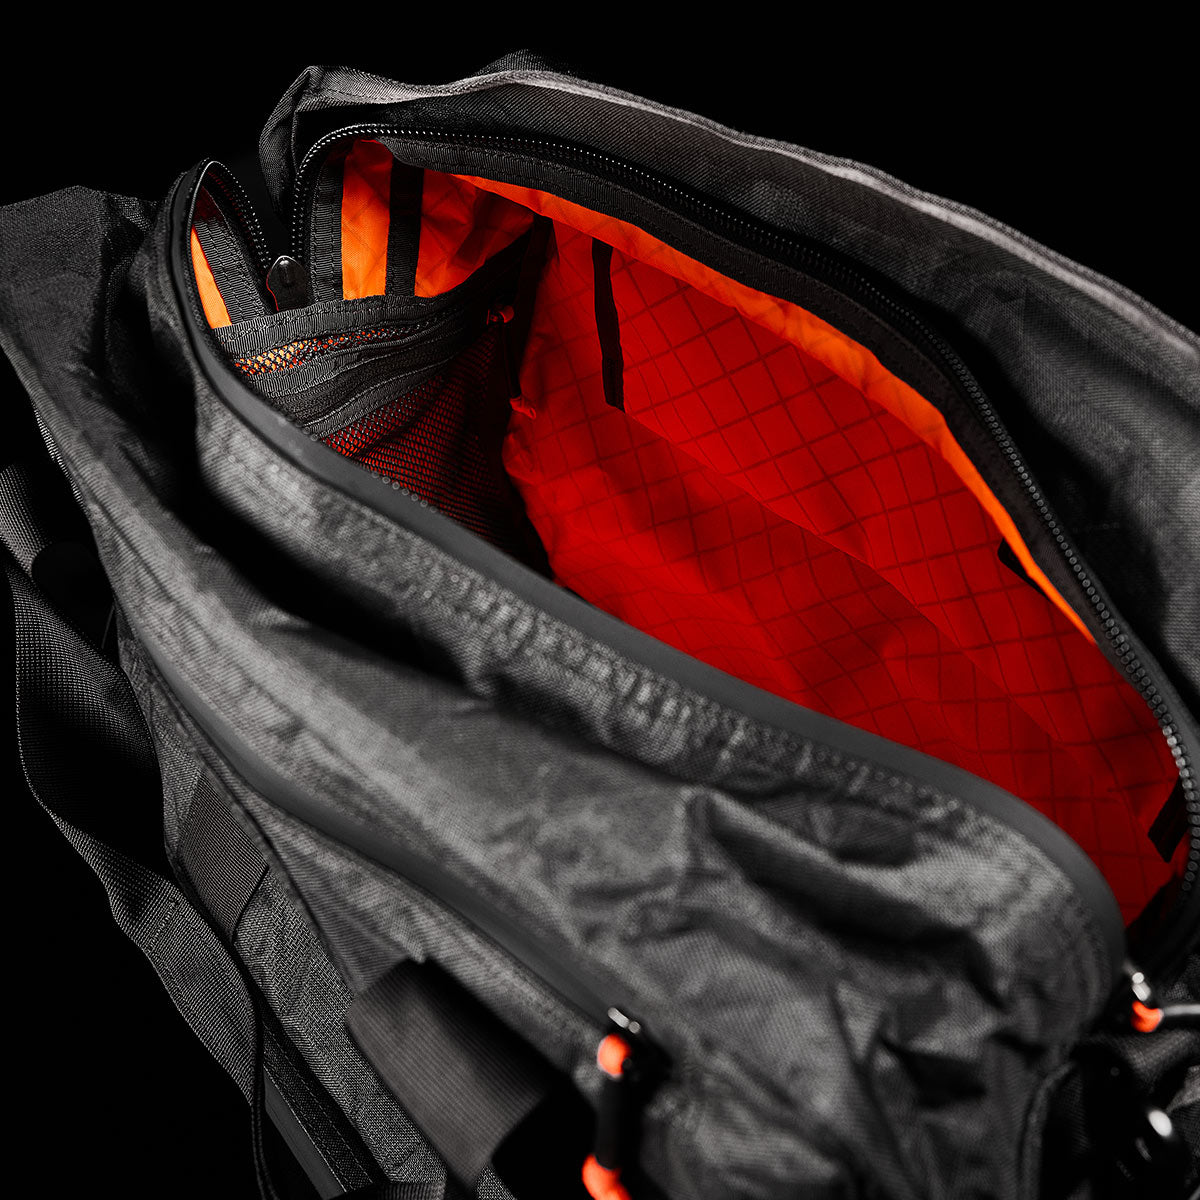 Kit Bag x Carryology - Ultra Blaze